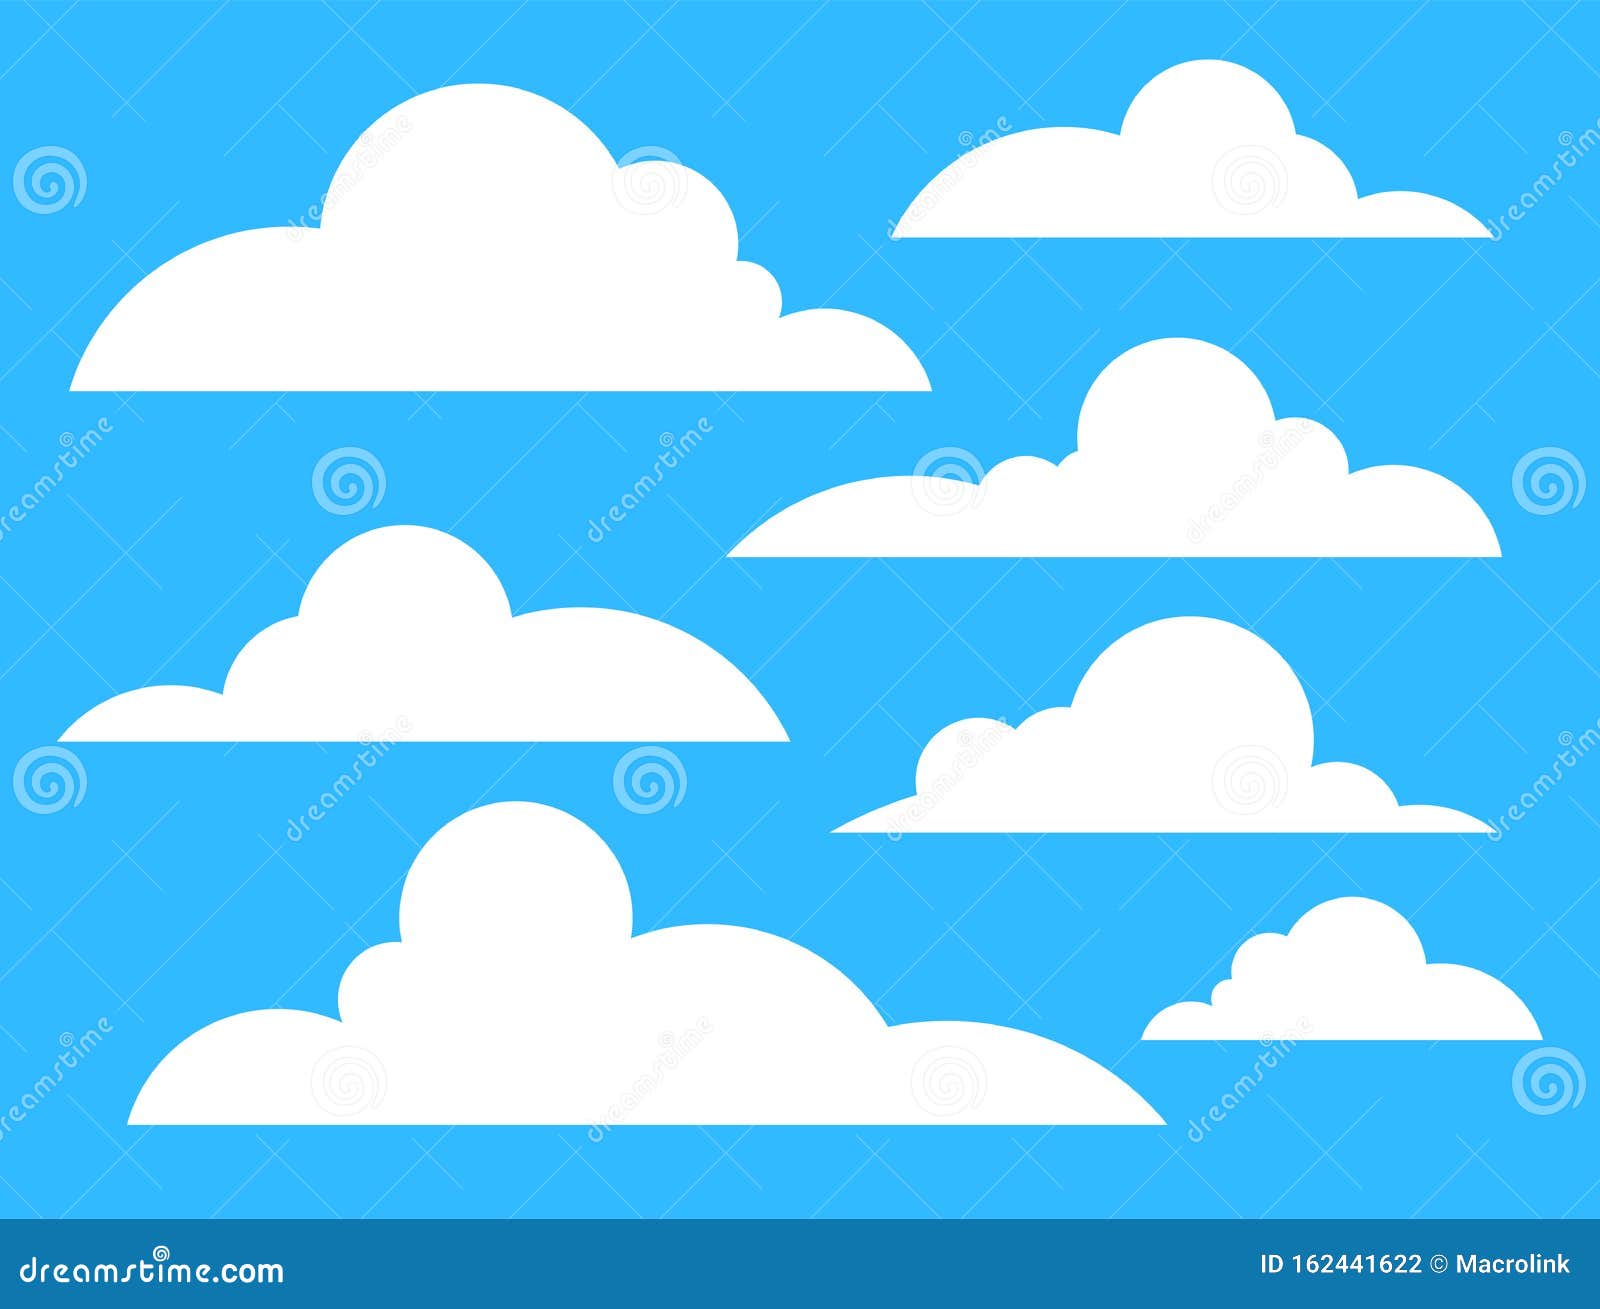 Soft Clouds Blue Sky Images – Browse 186,081 Stock Photos, Vectors